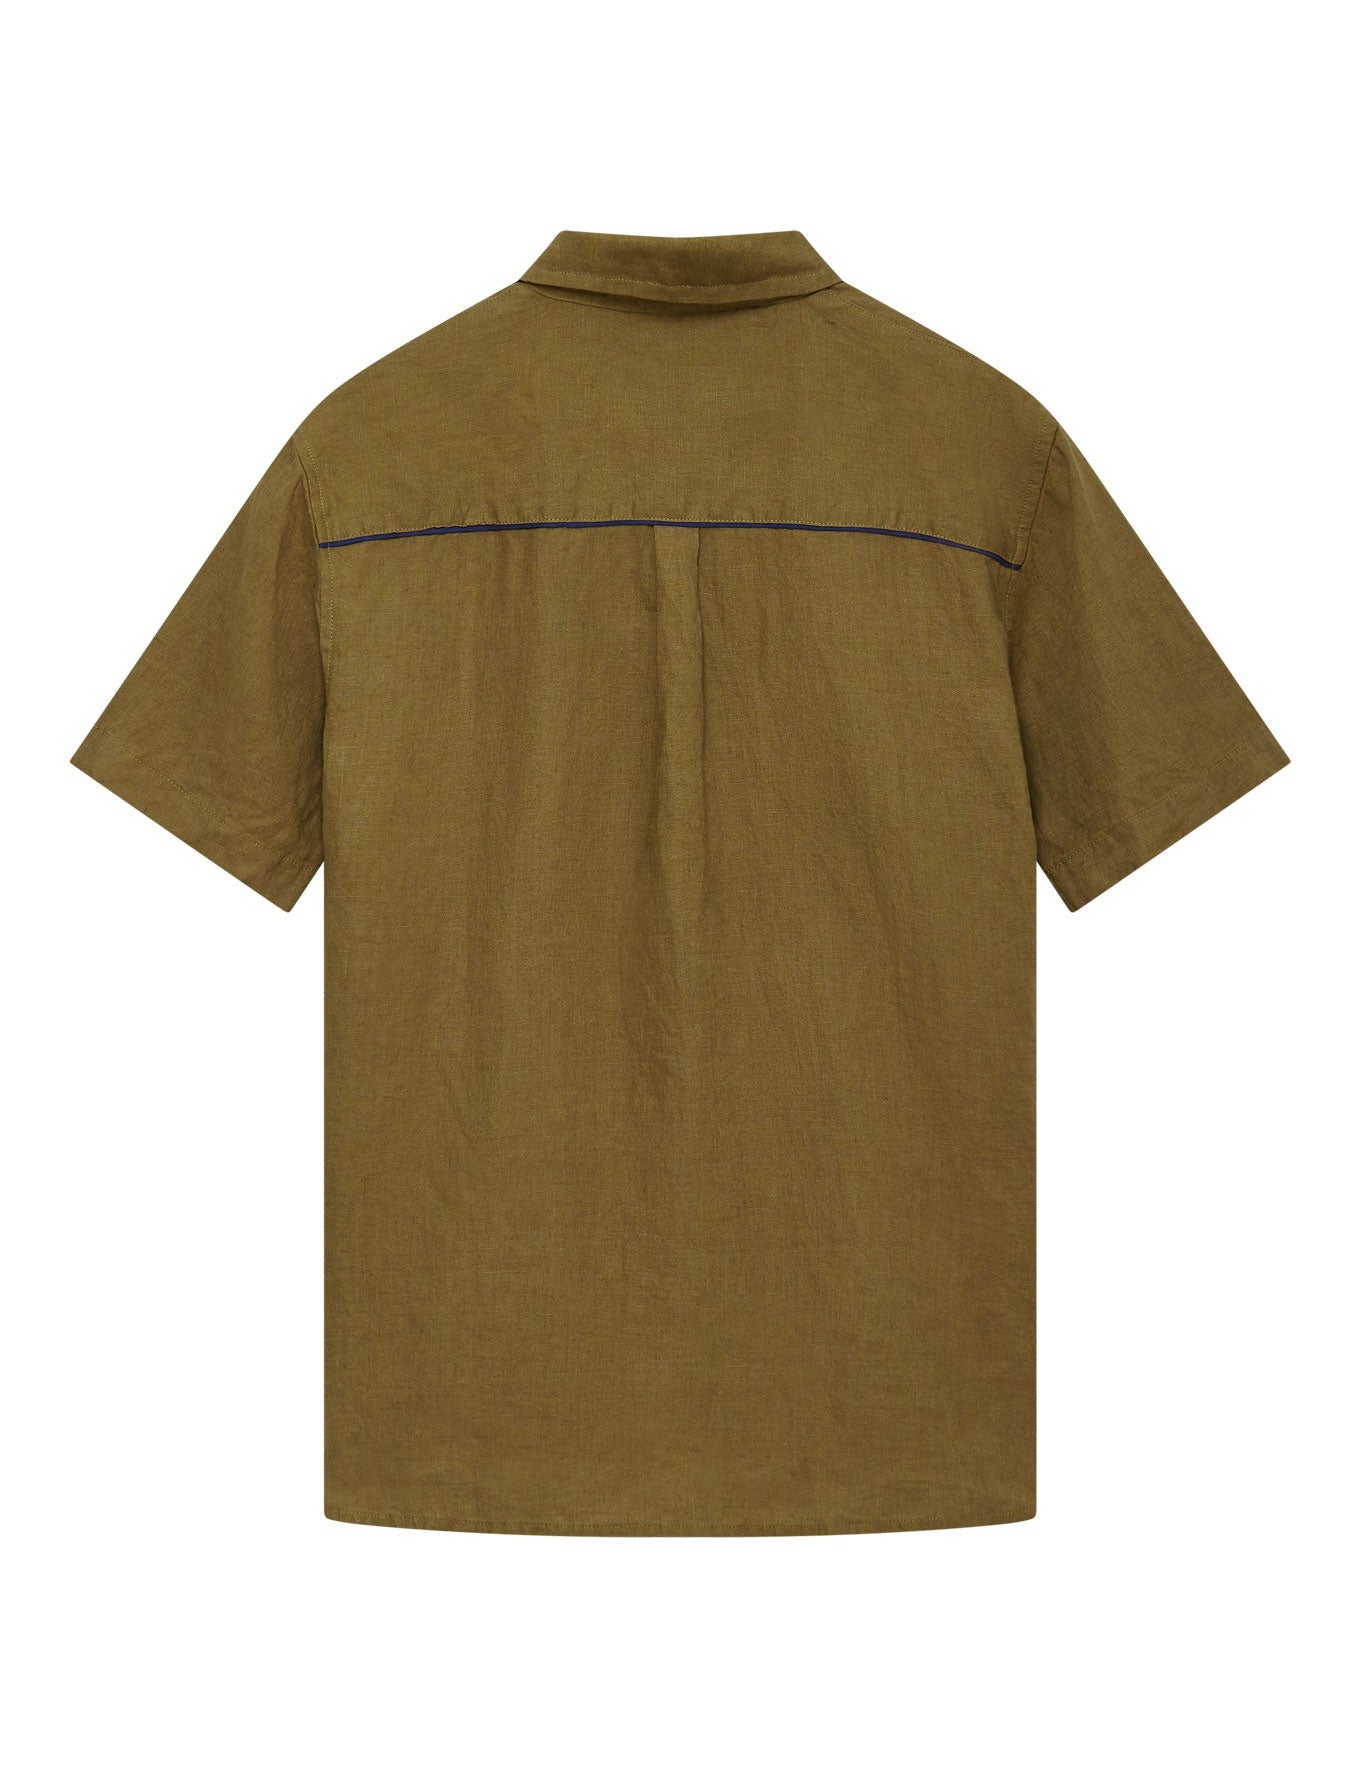 C1-L-58-Dingwalls-shirt---khaki-BACK_45ed3bc3-d325-4237-8146-40e13a825a91.jpg